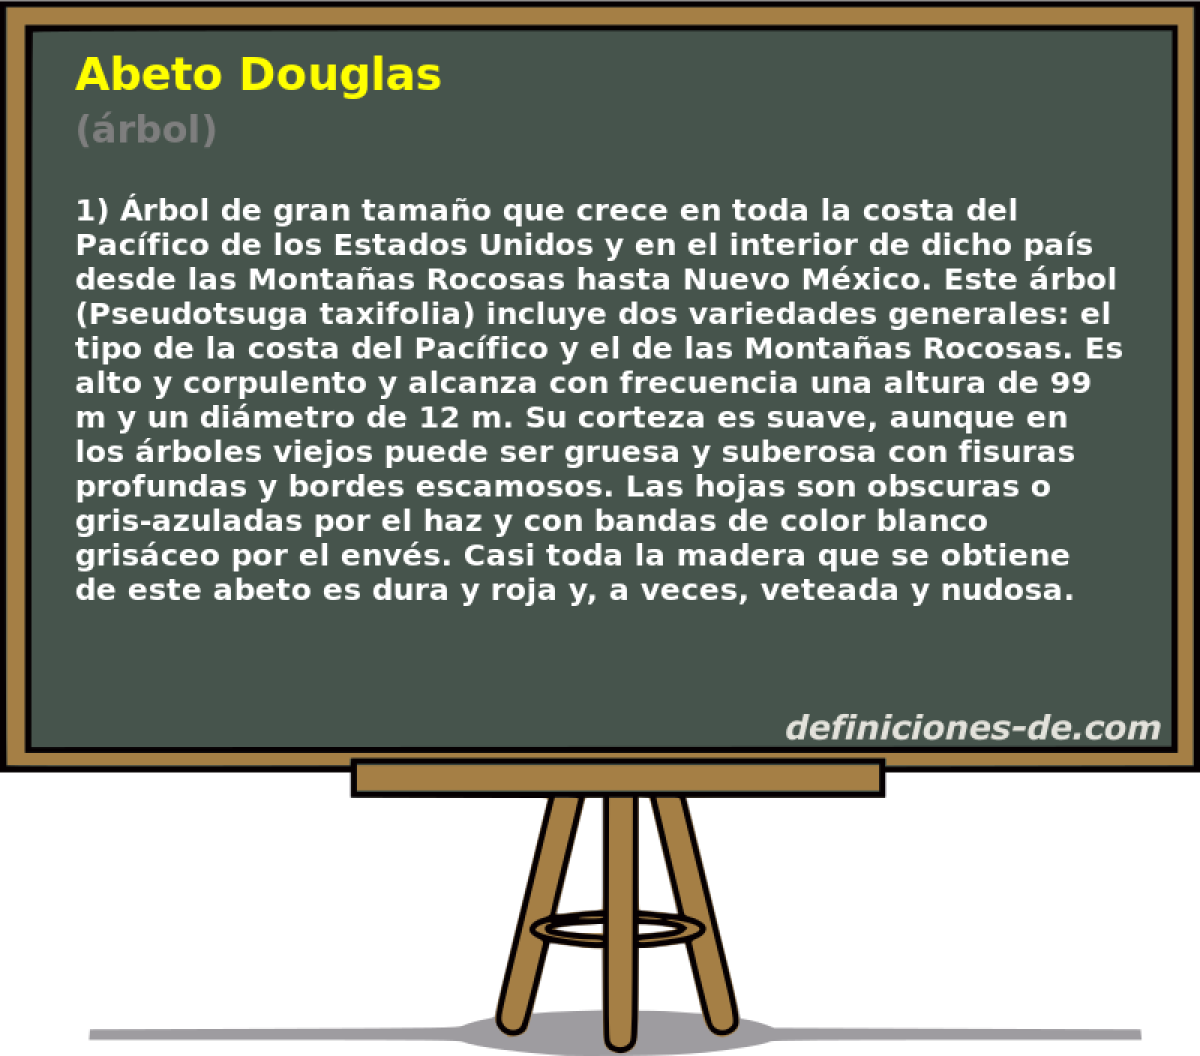 Abeto Douglas (rbol)